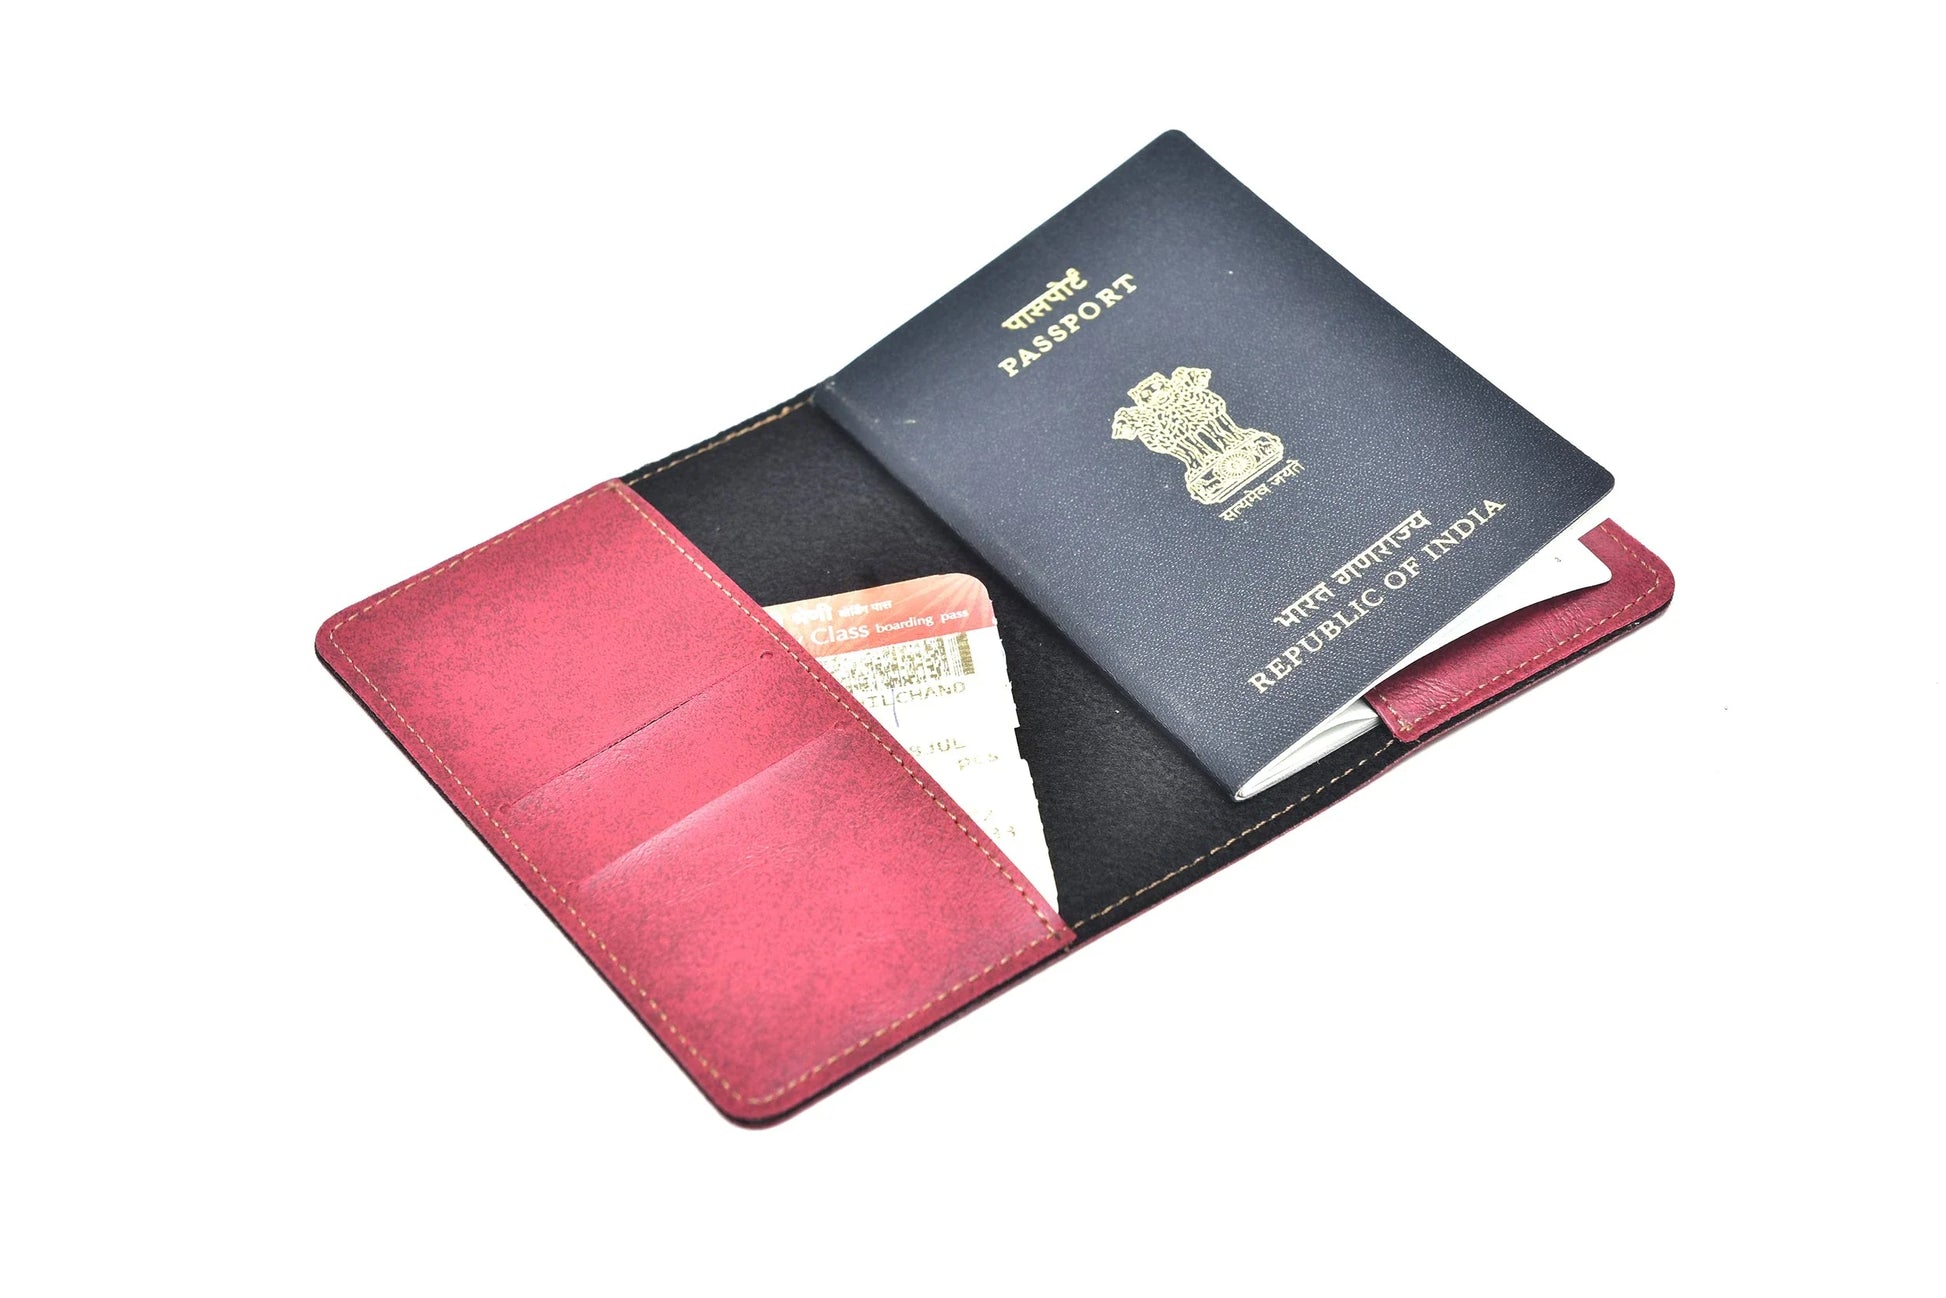 Inside or open view of maroon passport case